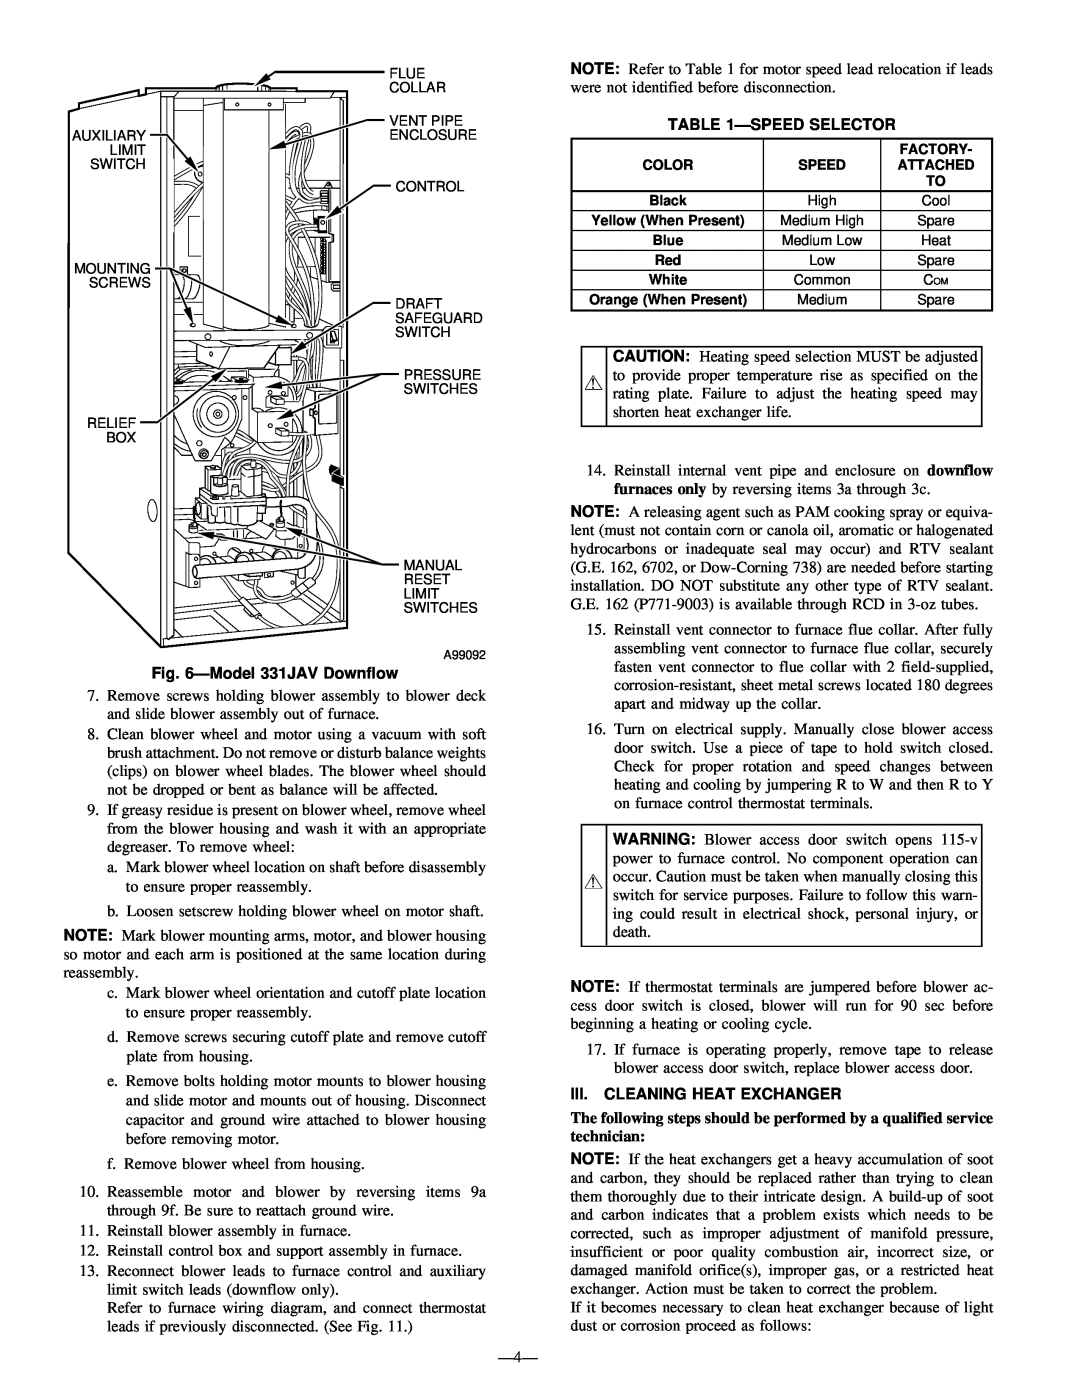 Bryant 330JAV instruction manual Speedselector, Model331JAV Downflow, Iii.Cleaning Heat Exchanger 